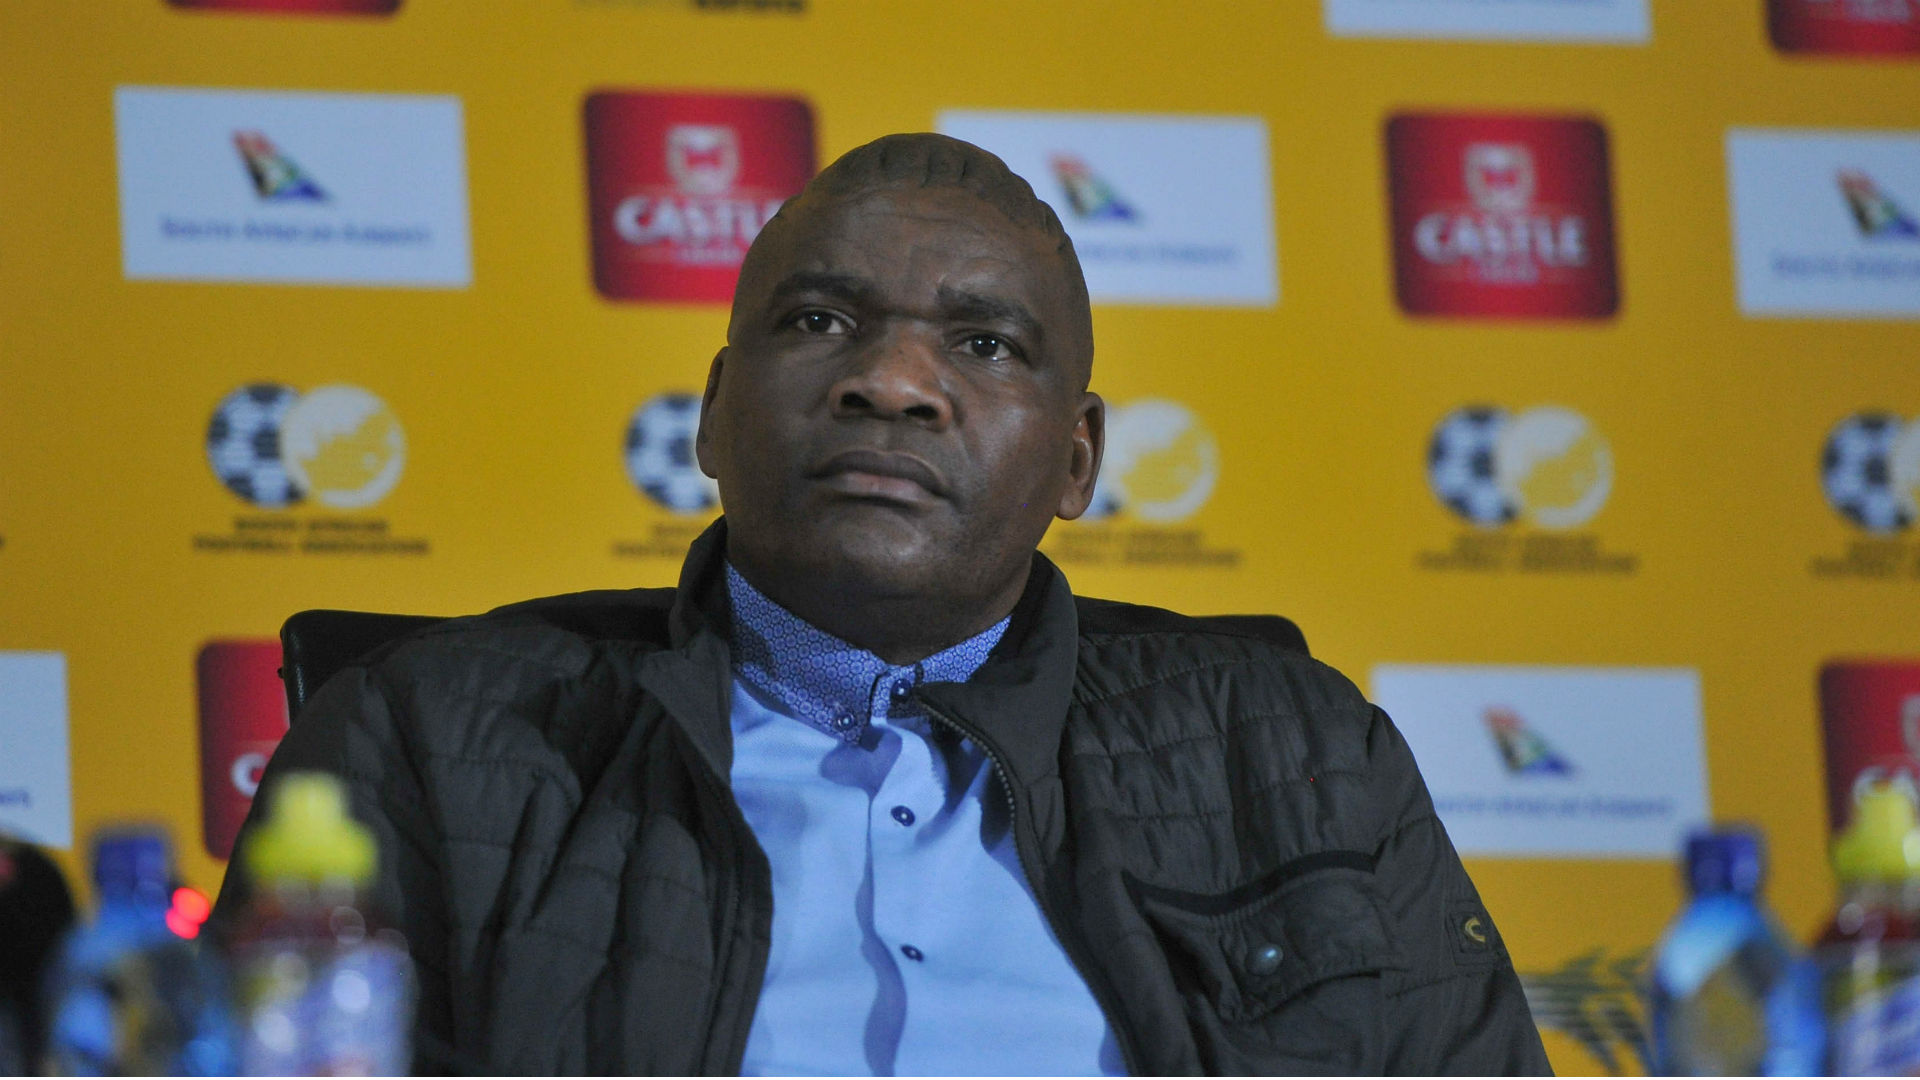 Former Cape Town City coach McCarthy earmarked for Bafana Bafana scout job - Ntseki